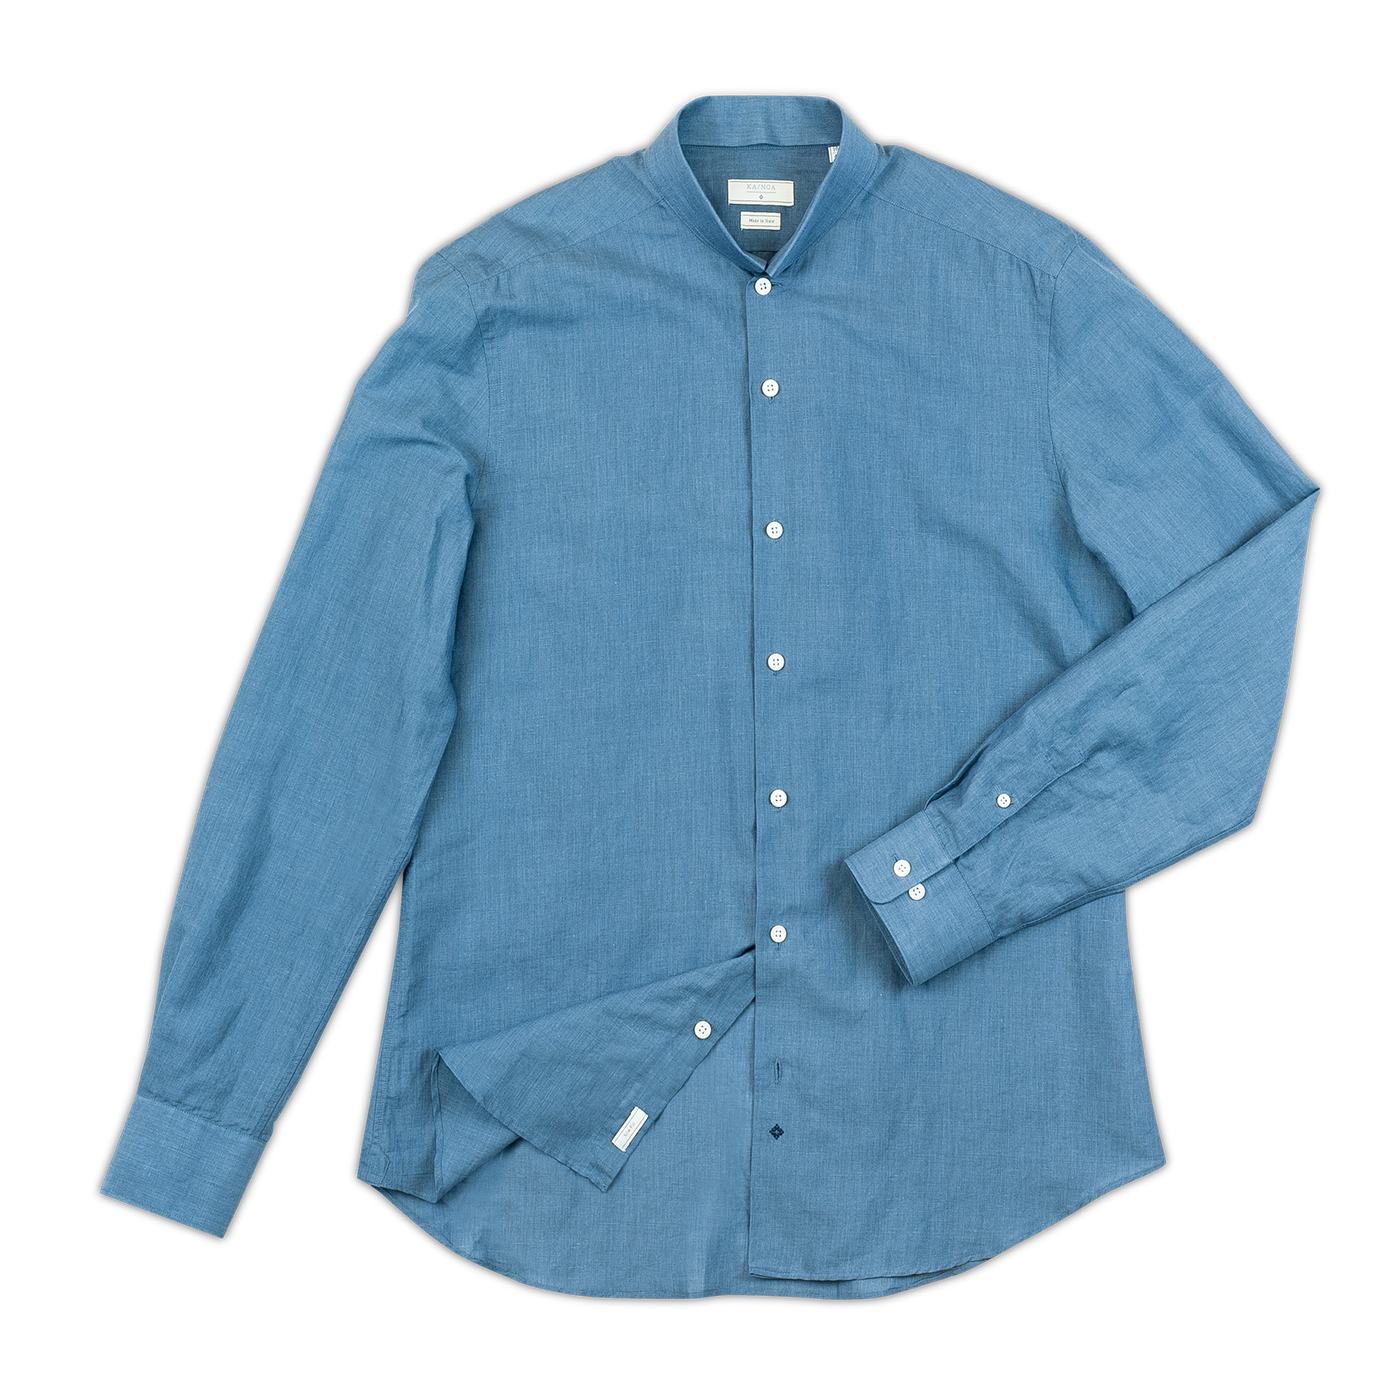 Conrad long-sleeved shirt in light voile linen (sugar paper)